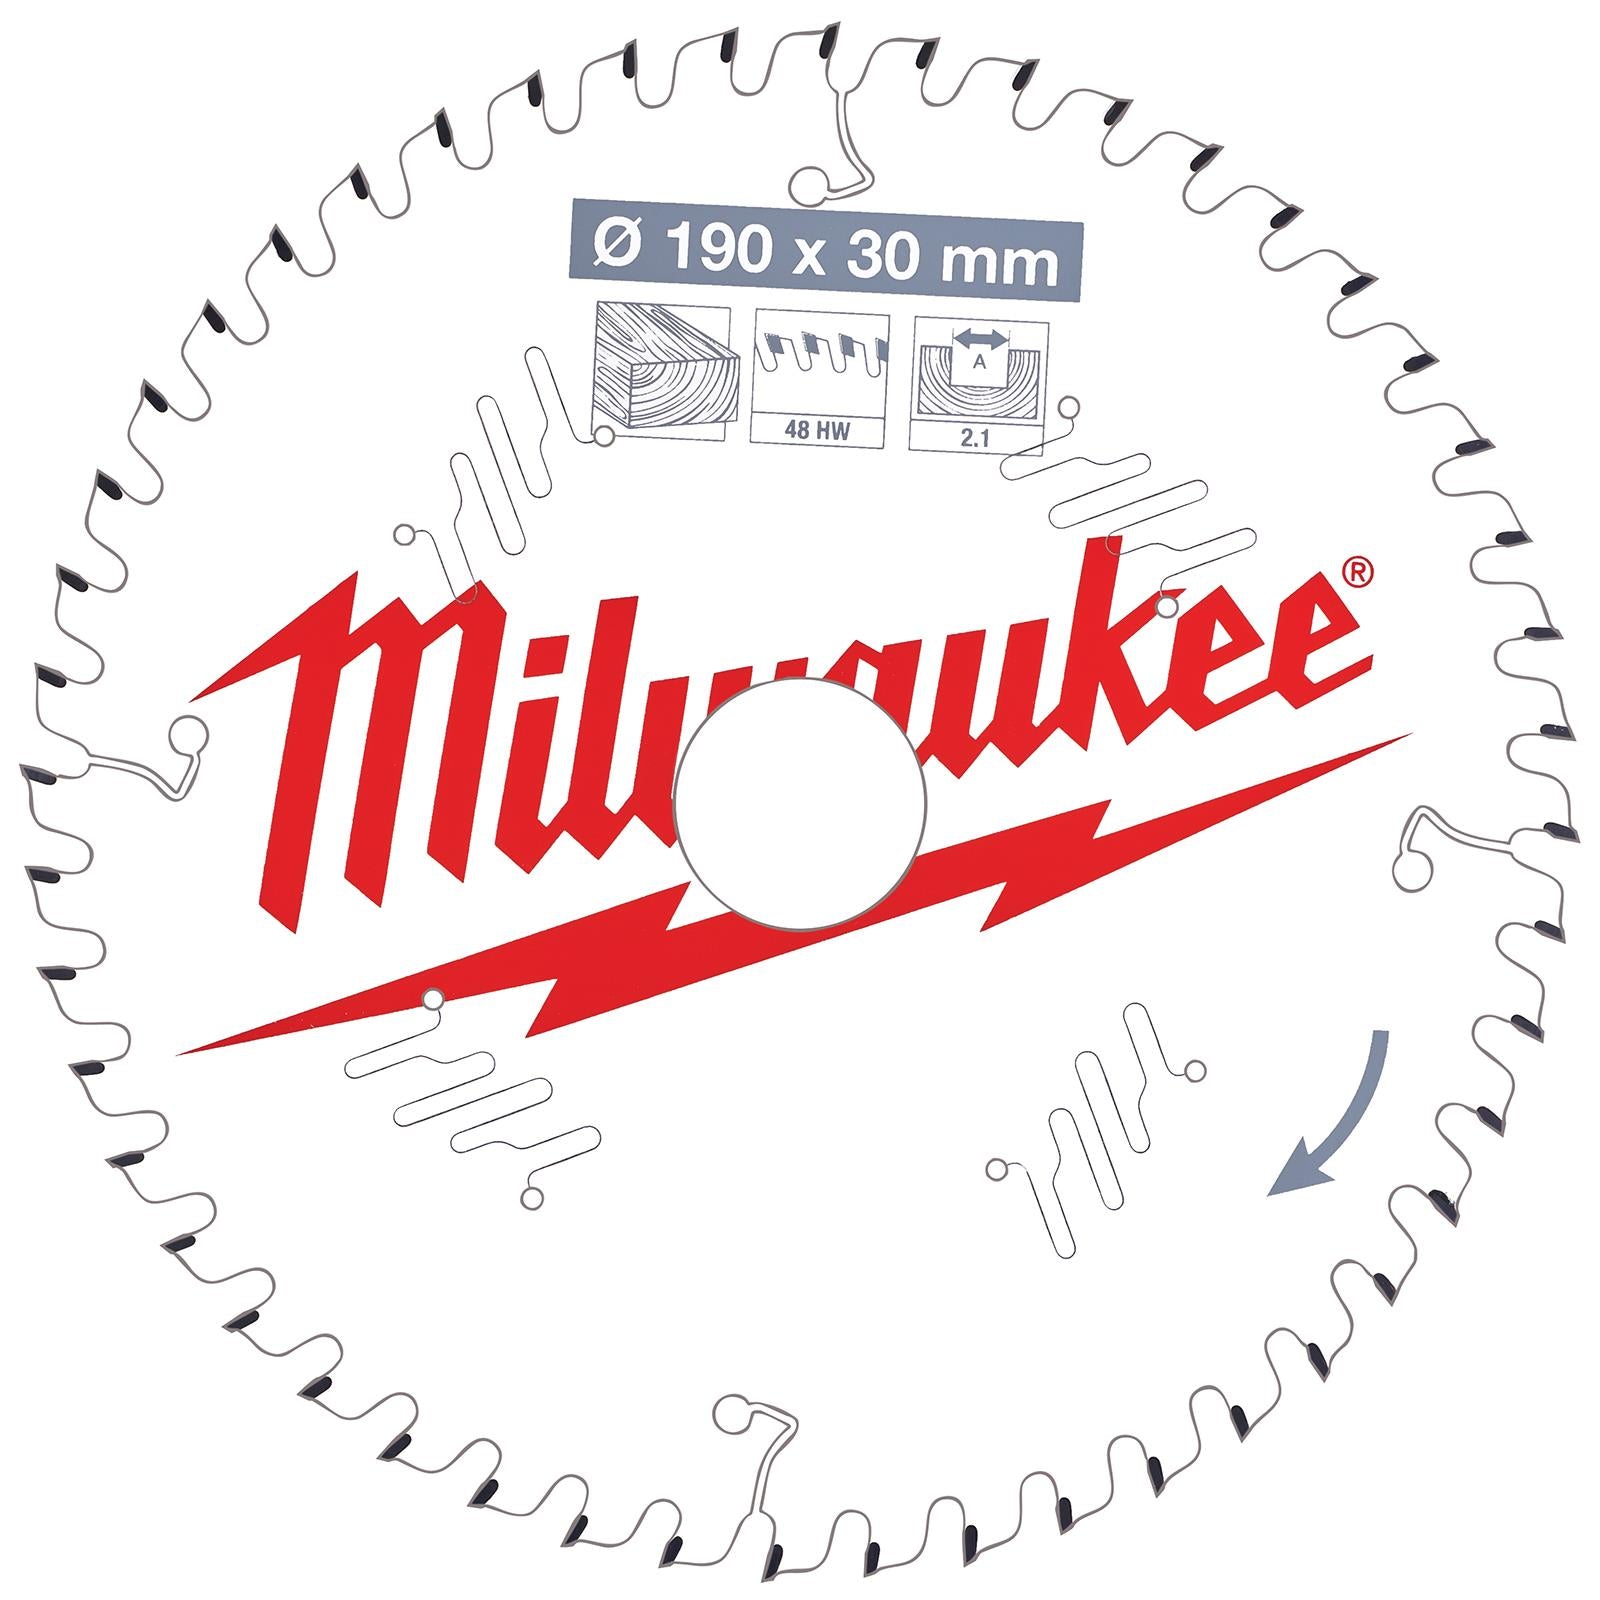 Milwaukee Circular Saw Blade for Wood Clean Cut 190mm x 30mm Bore x 2.1mm Width 48T ATB